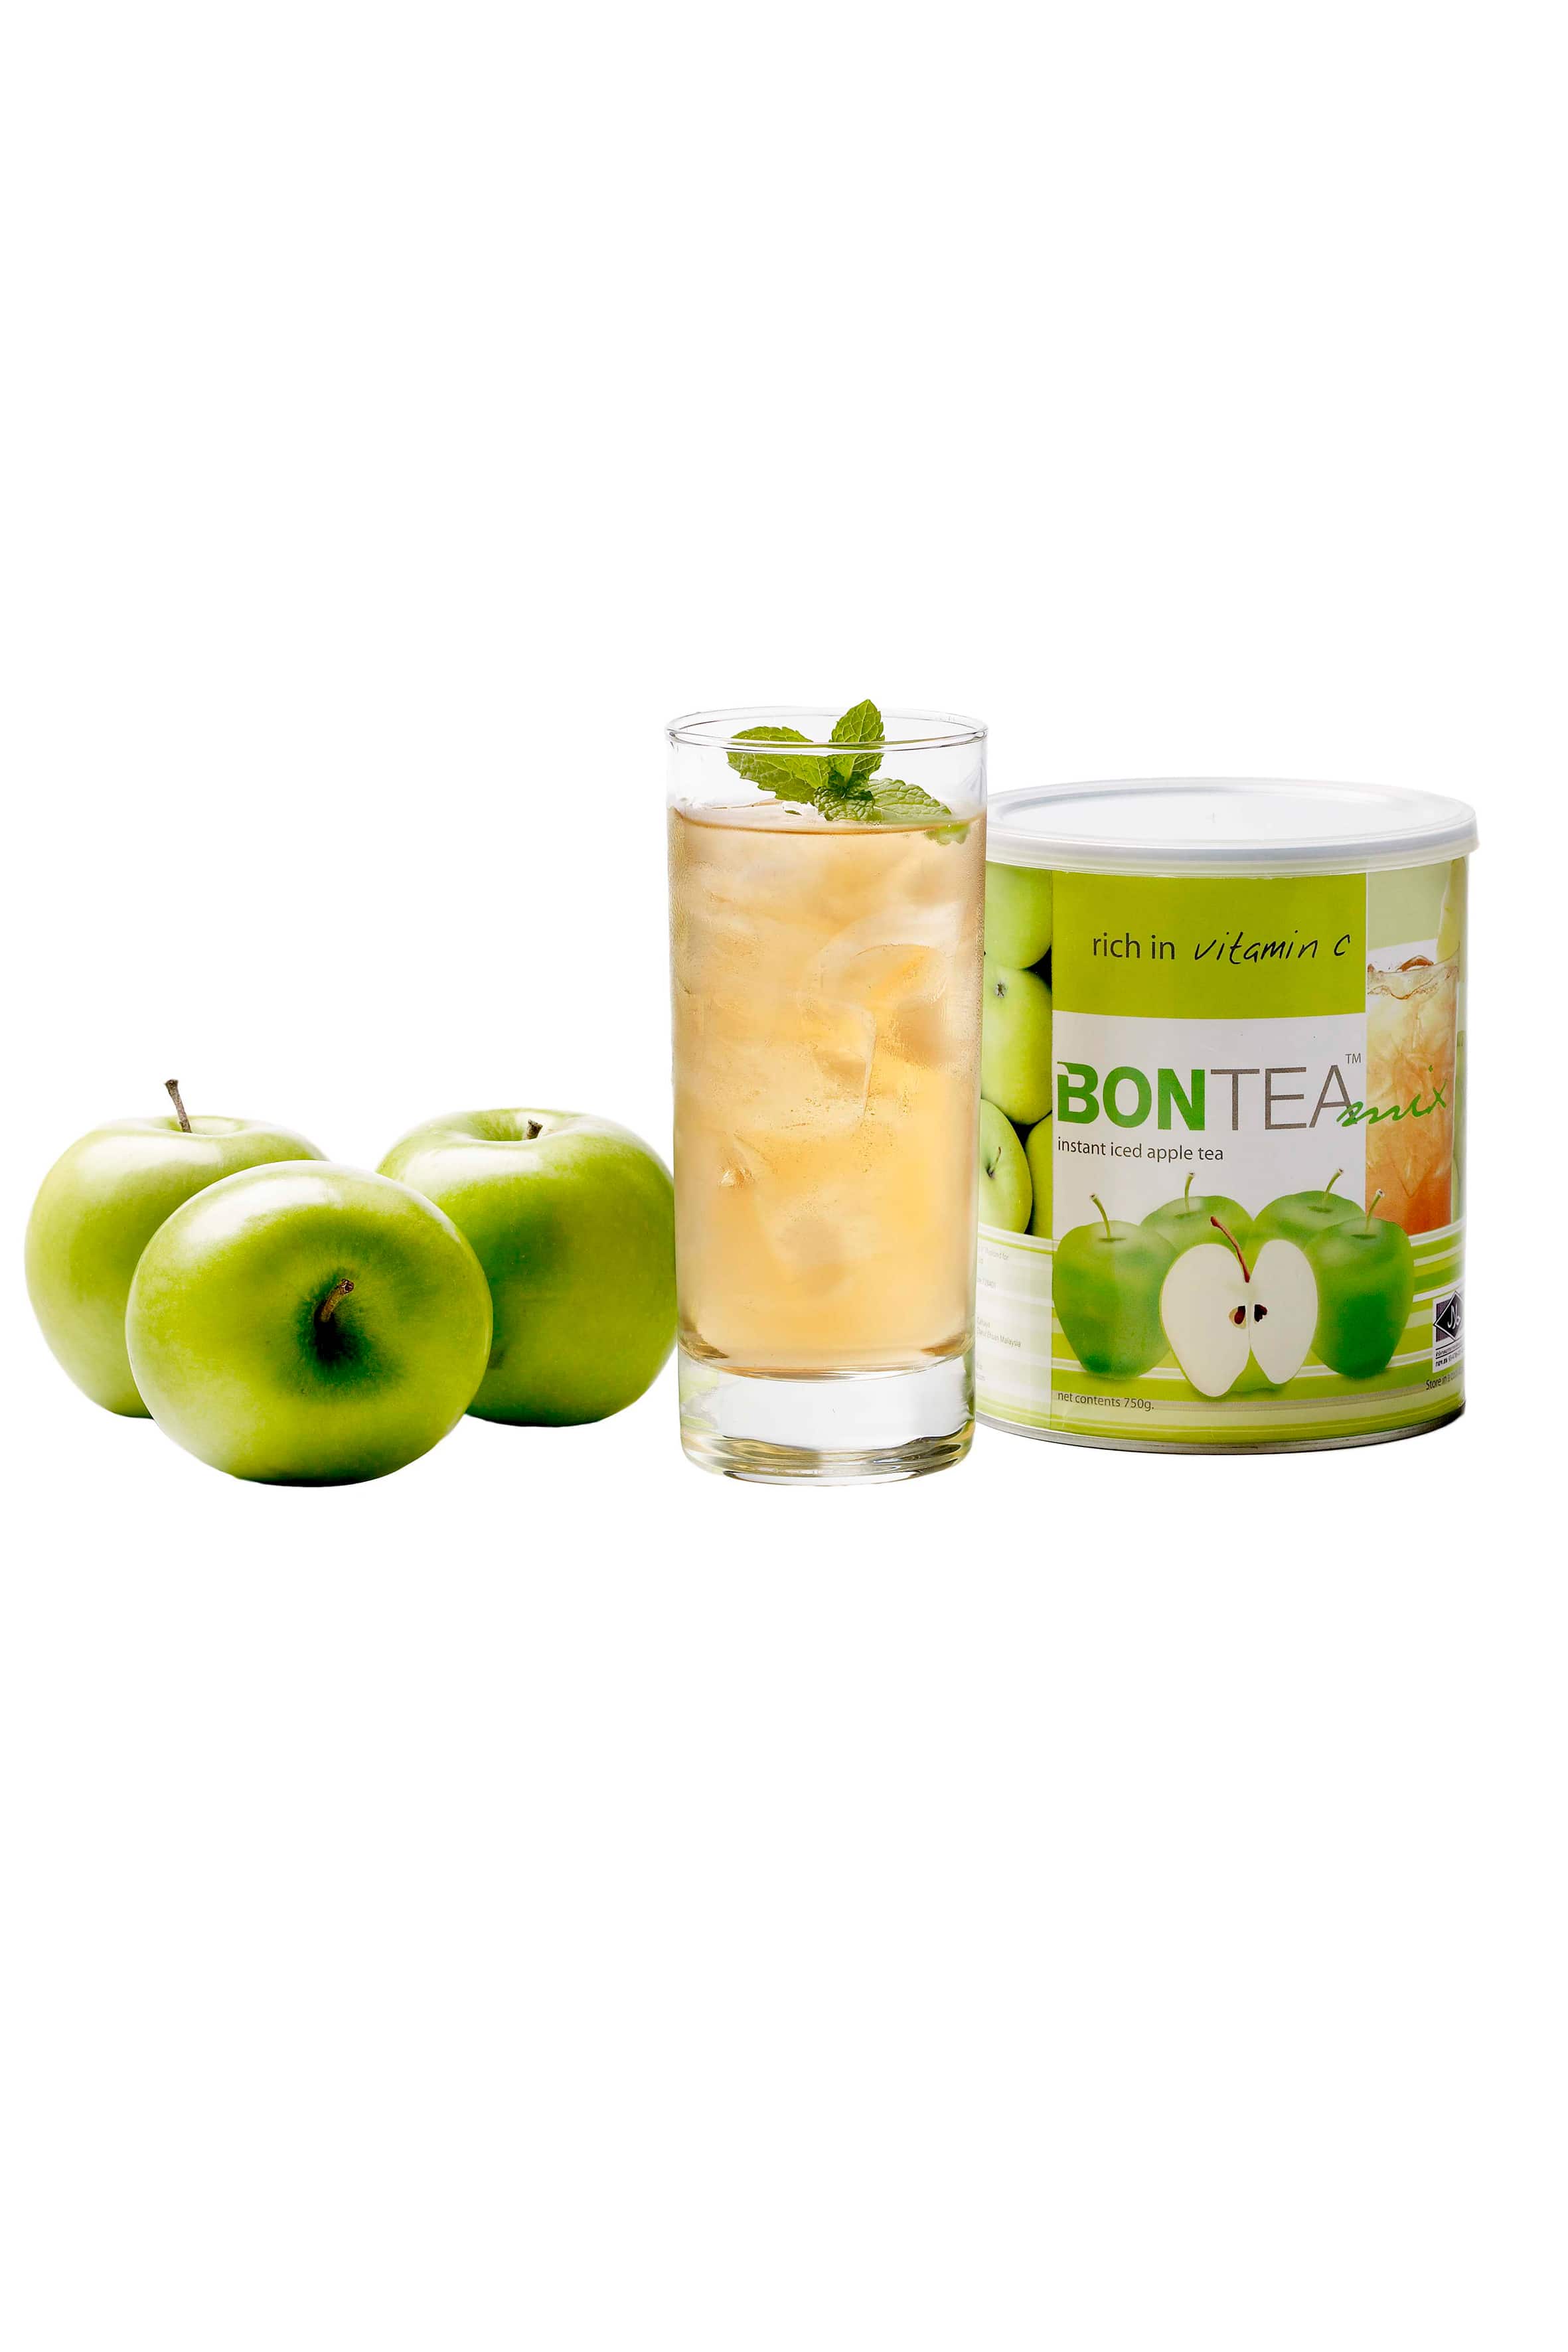 Bontea Mix Instant Iced Apple Flavoured Tea